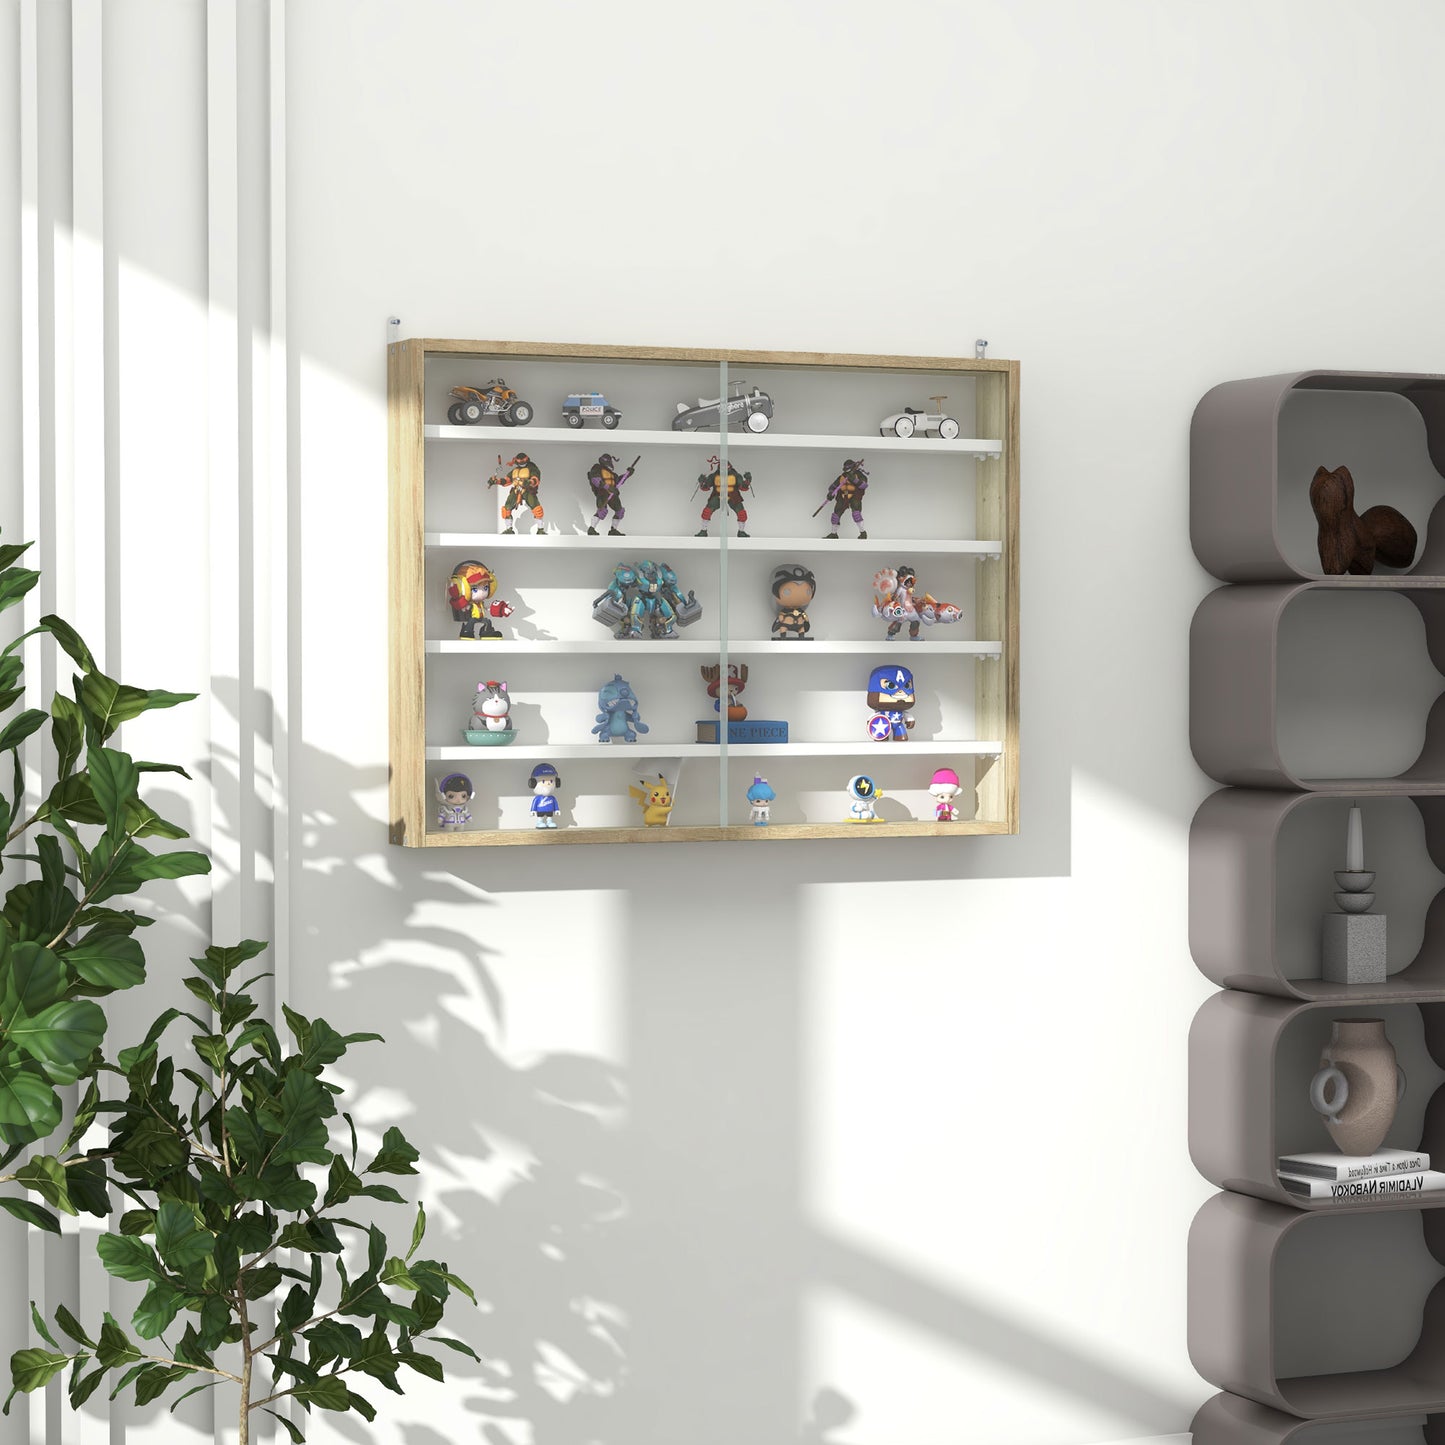 HOMCOM 5-Tier Wall Display Shelf Unit Cabinet w/ 4 Adjustable Shelves Glass Doors Home Office Ornaments 60x80cm Natural